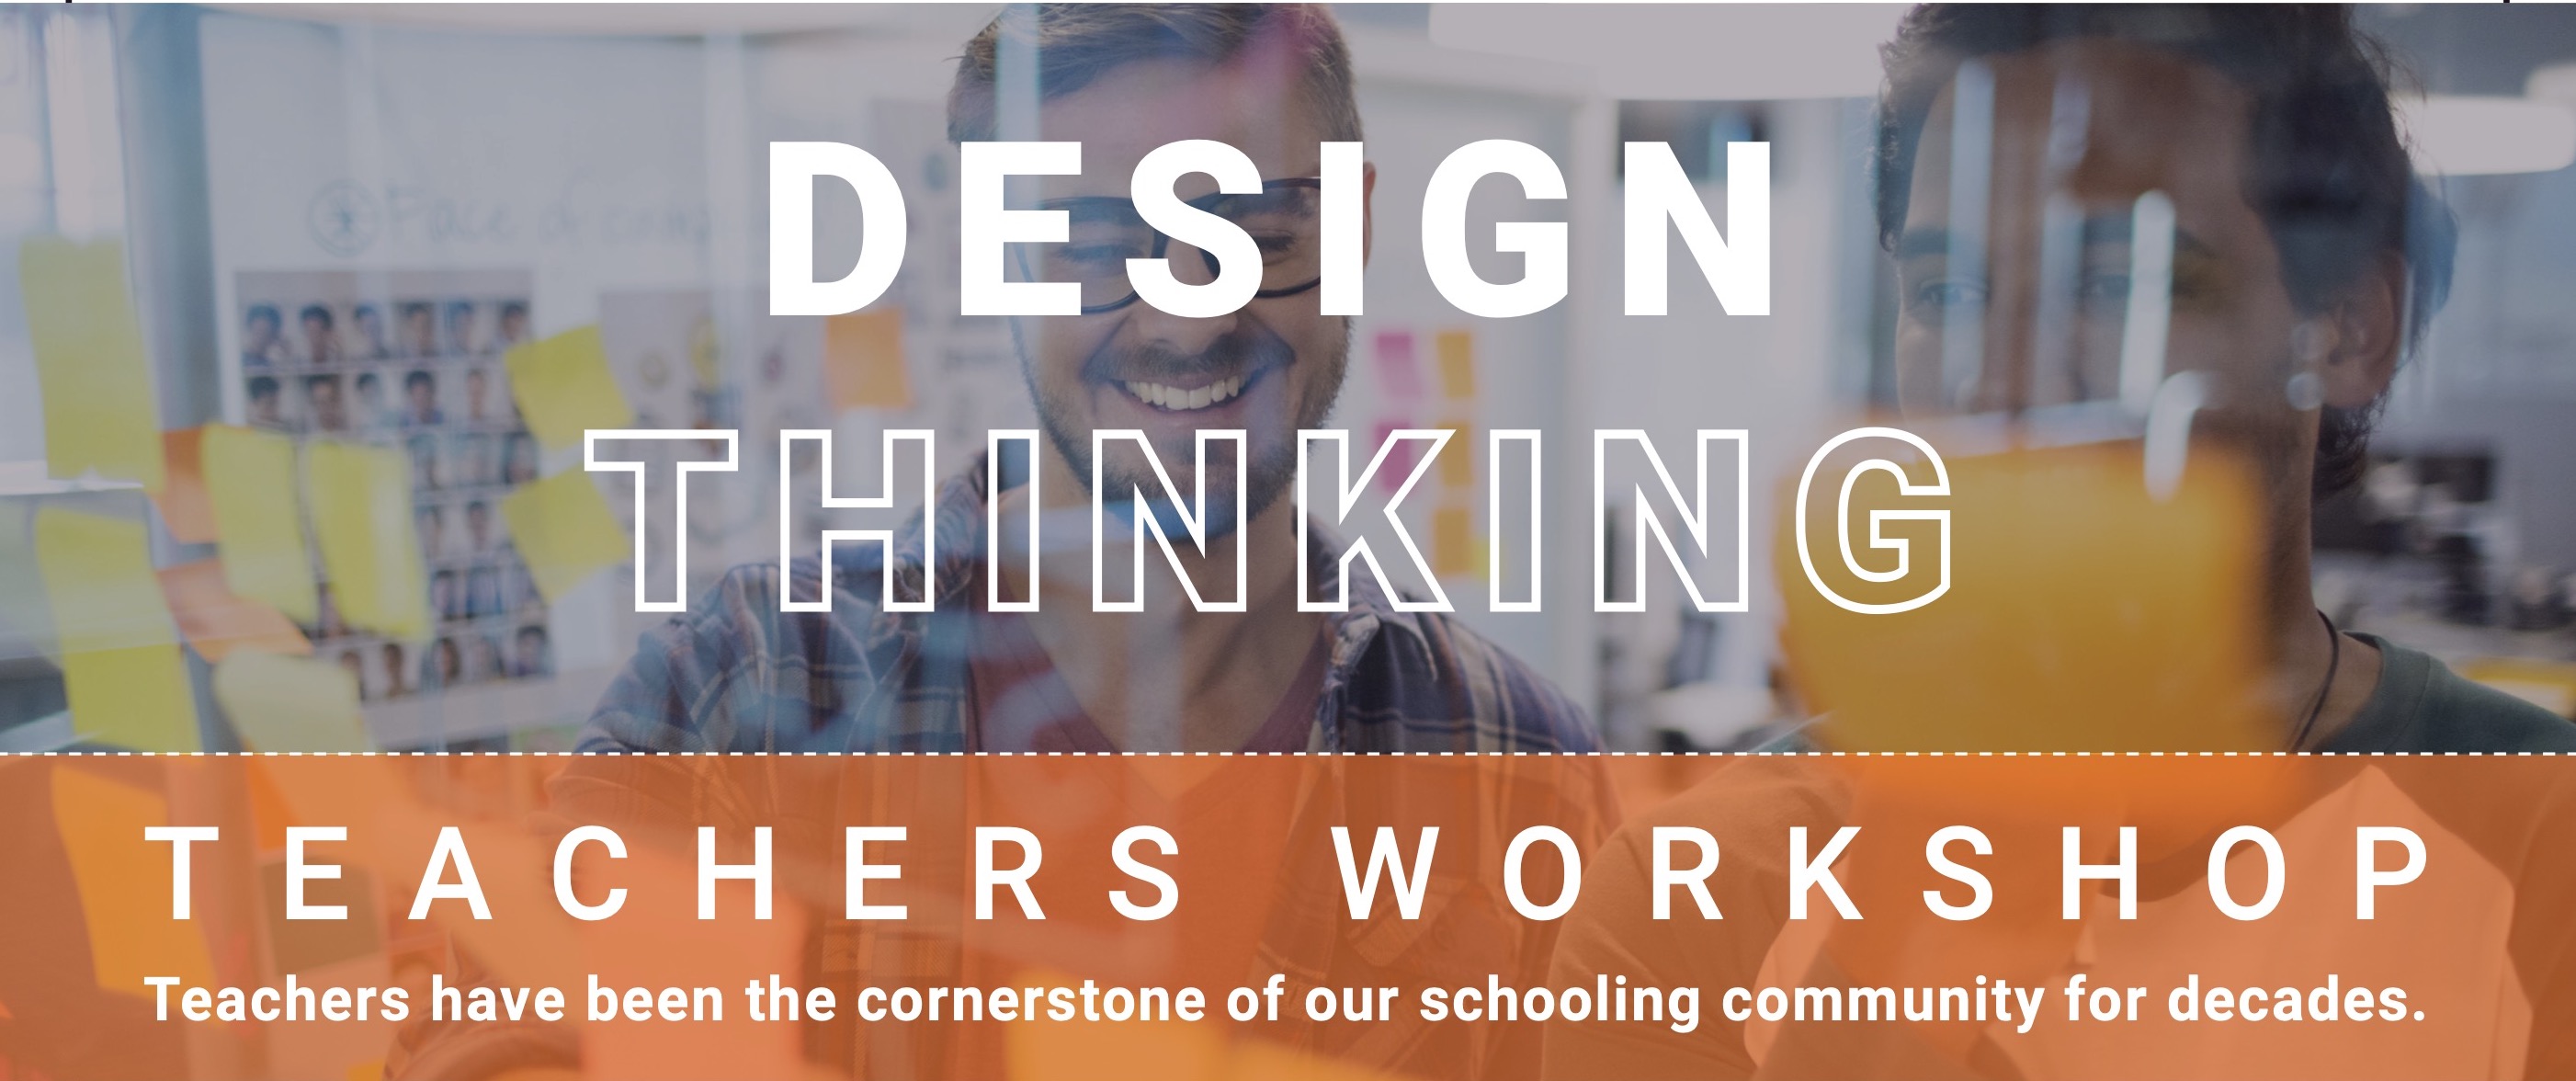 Design Thinking Teachers Workshops